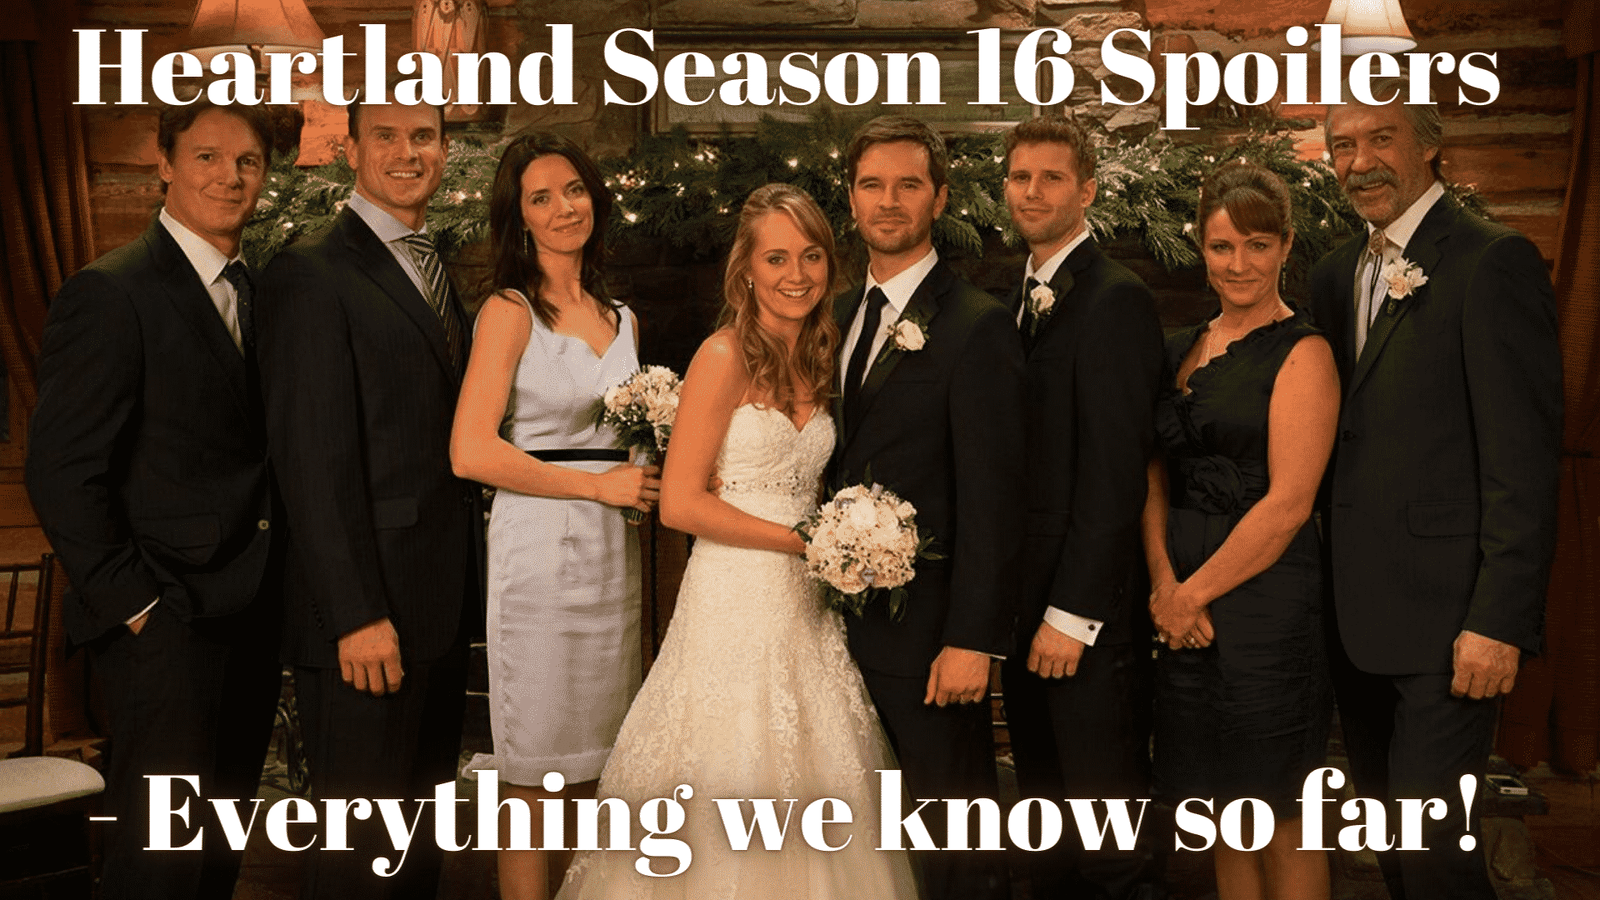 Heartland Season 16 Spoilers - Everything we know so far!